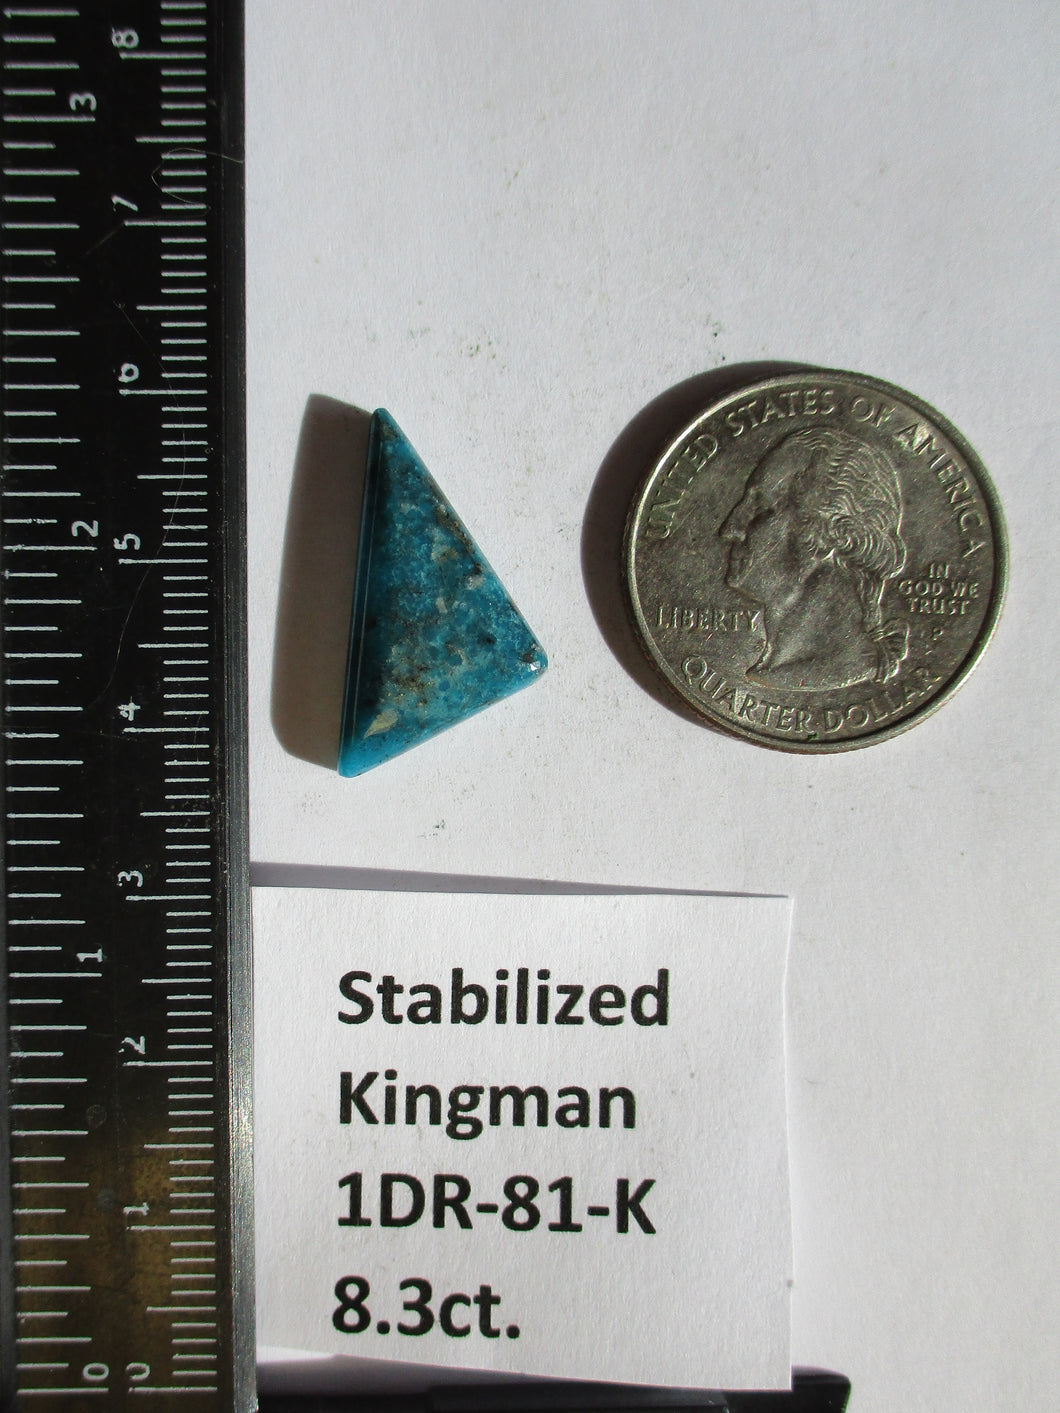 8.3ct (23x12x5 mm) Stabilized Kingman Turquoise Cabochon Gemstone, # 1DR 81